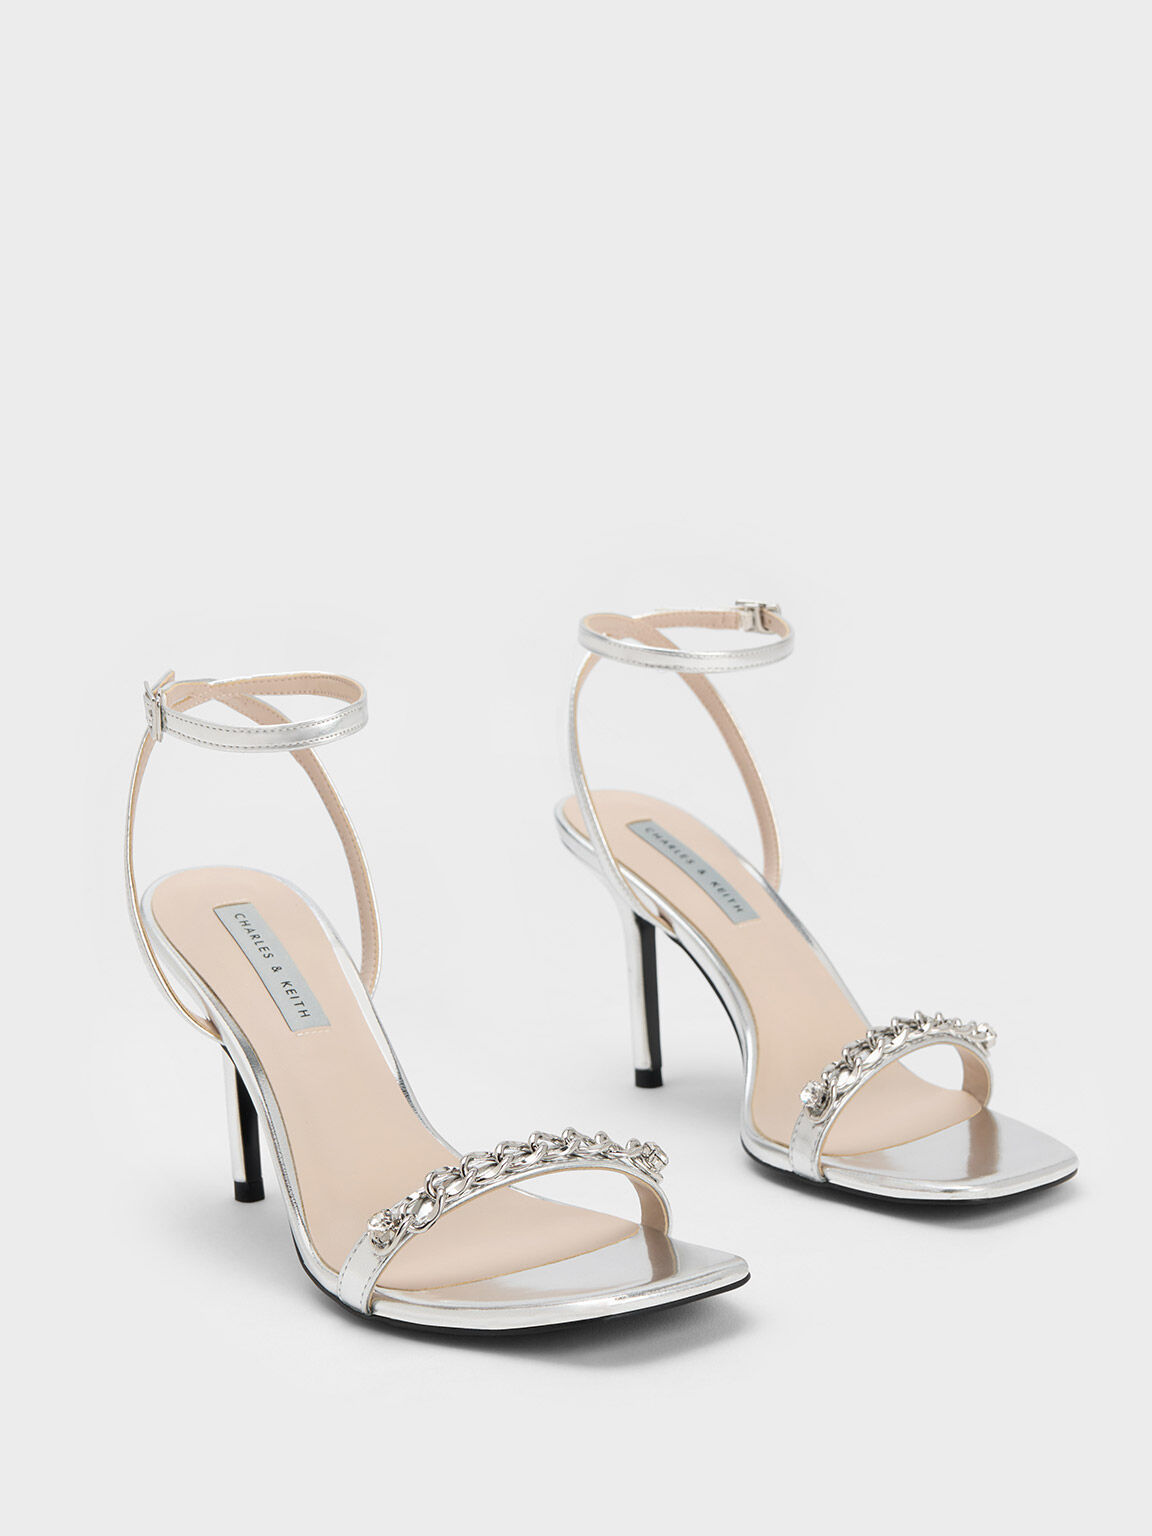 Chain-Embellished Metallic Ankle Strap Sandals, Silver, hi-res